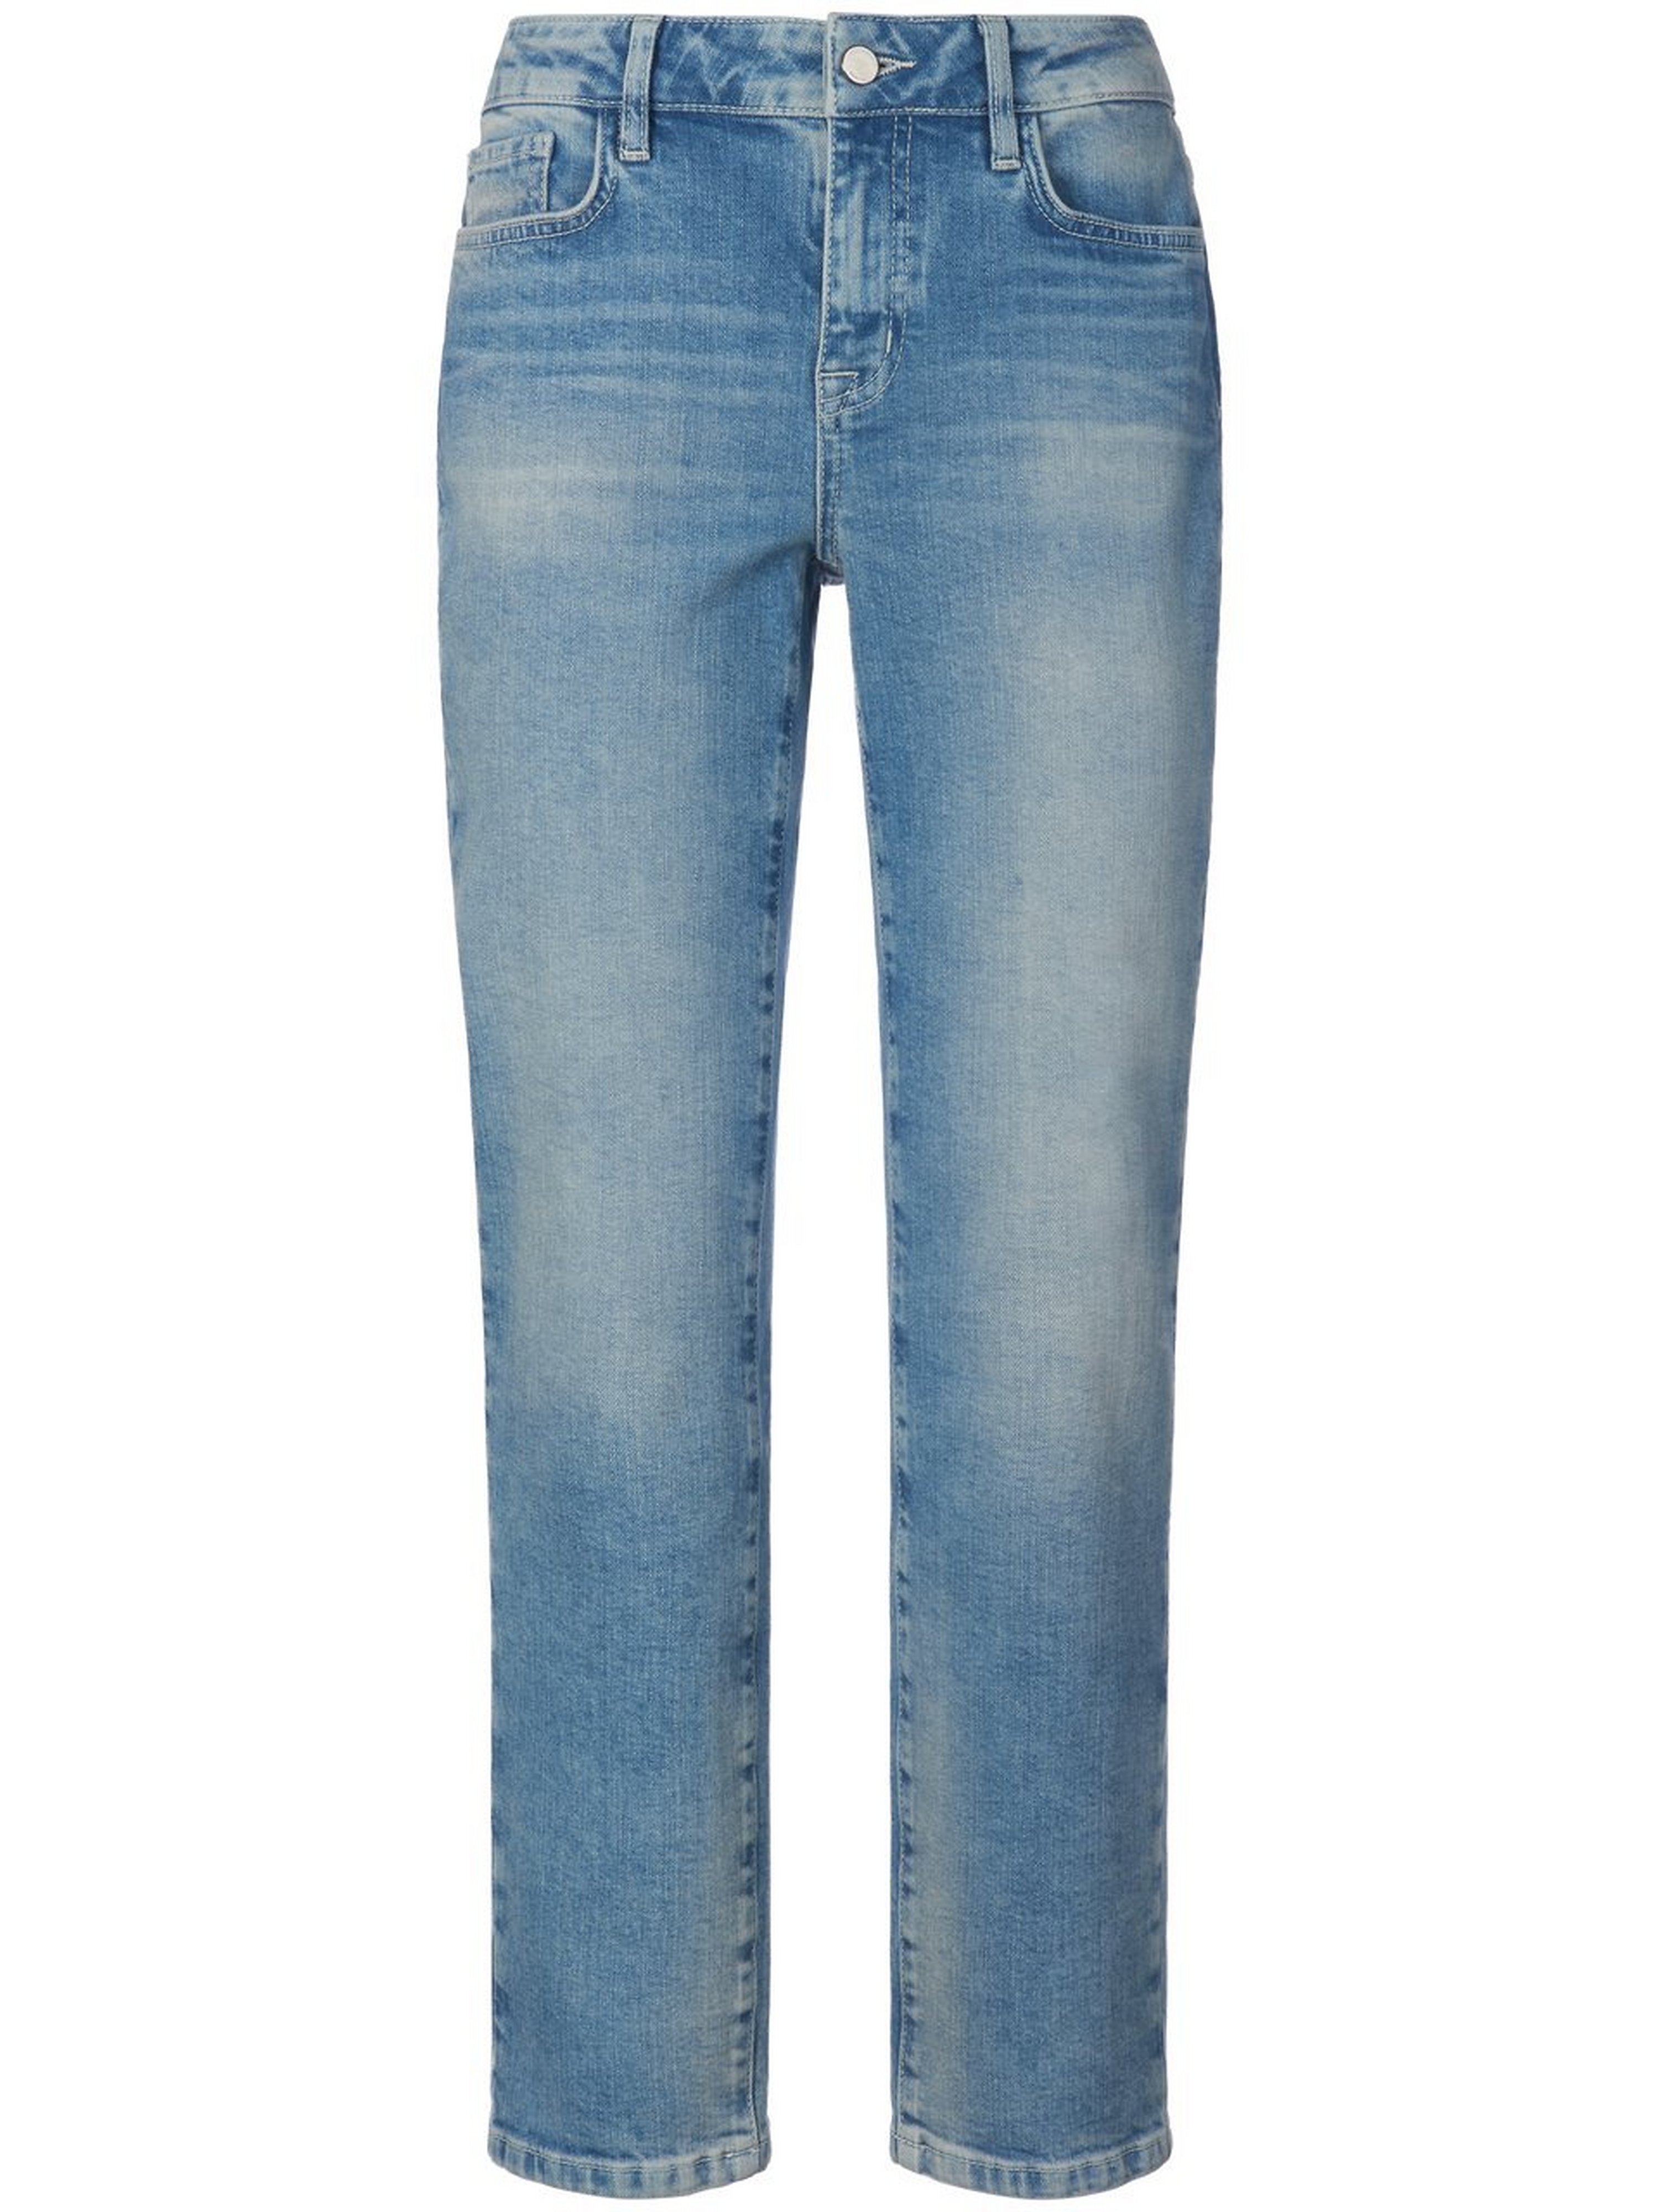 Fadenmeister Berlin Enkellange jeans in five-pocketsmodel Van denim